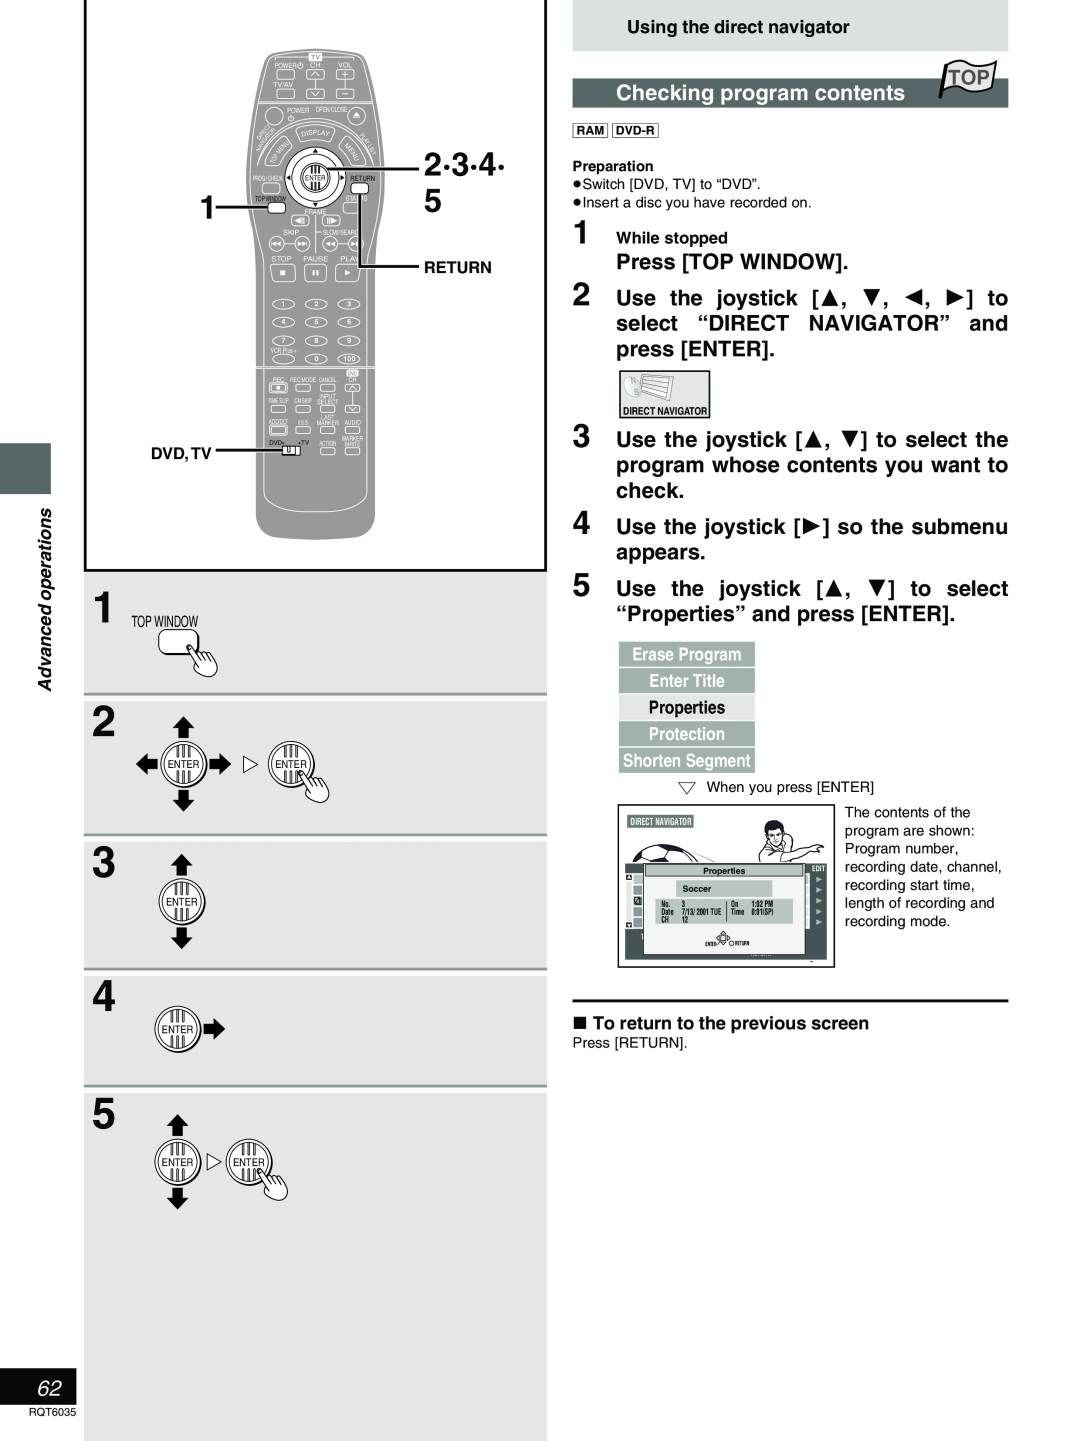 Panasonic DMR-E20 2·3·4·, Checking program contents, Press TOP WINDOW, Use the joystick 3, 4, 2, 1 to, press ENTER, Return 